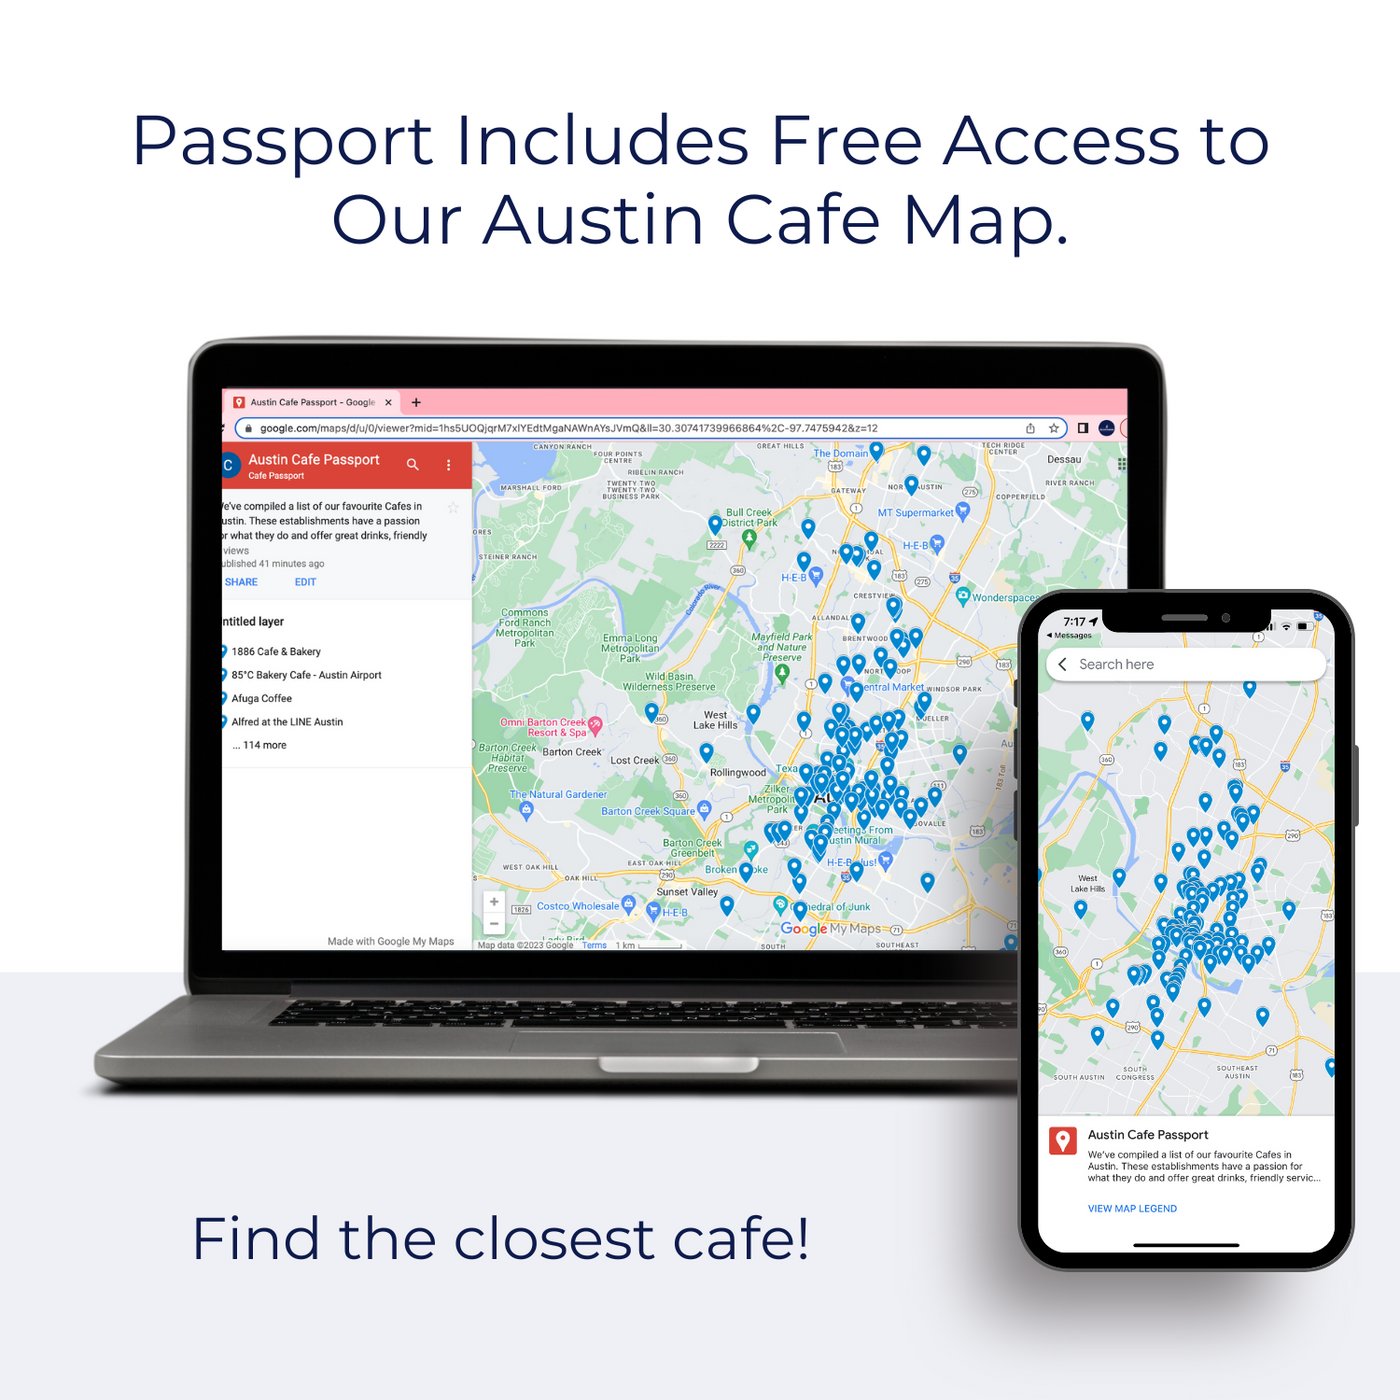 Austin Cafe Passport Map